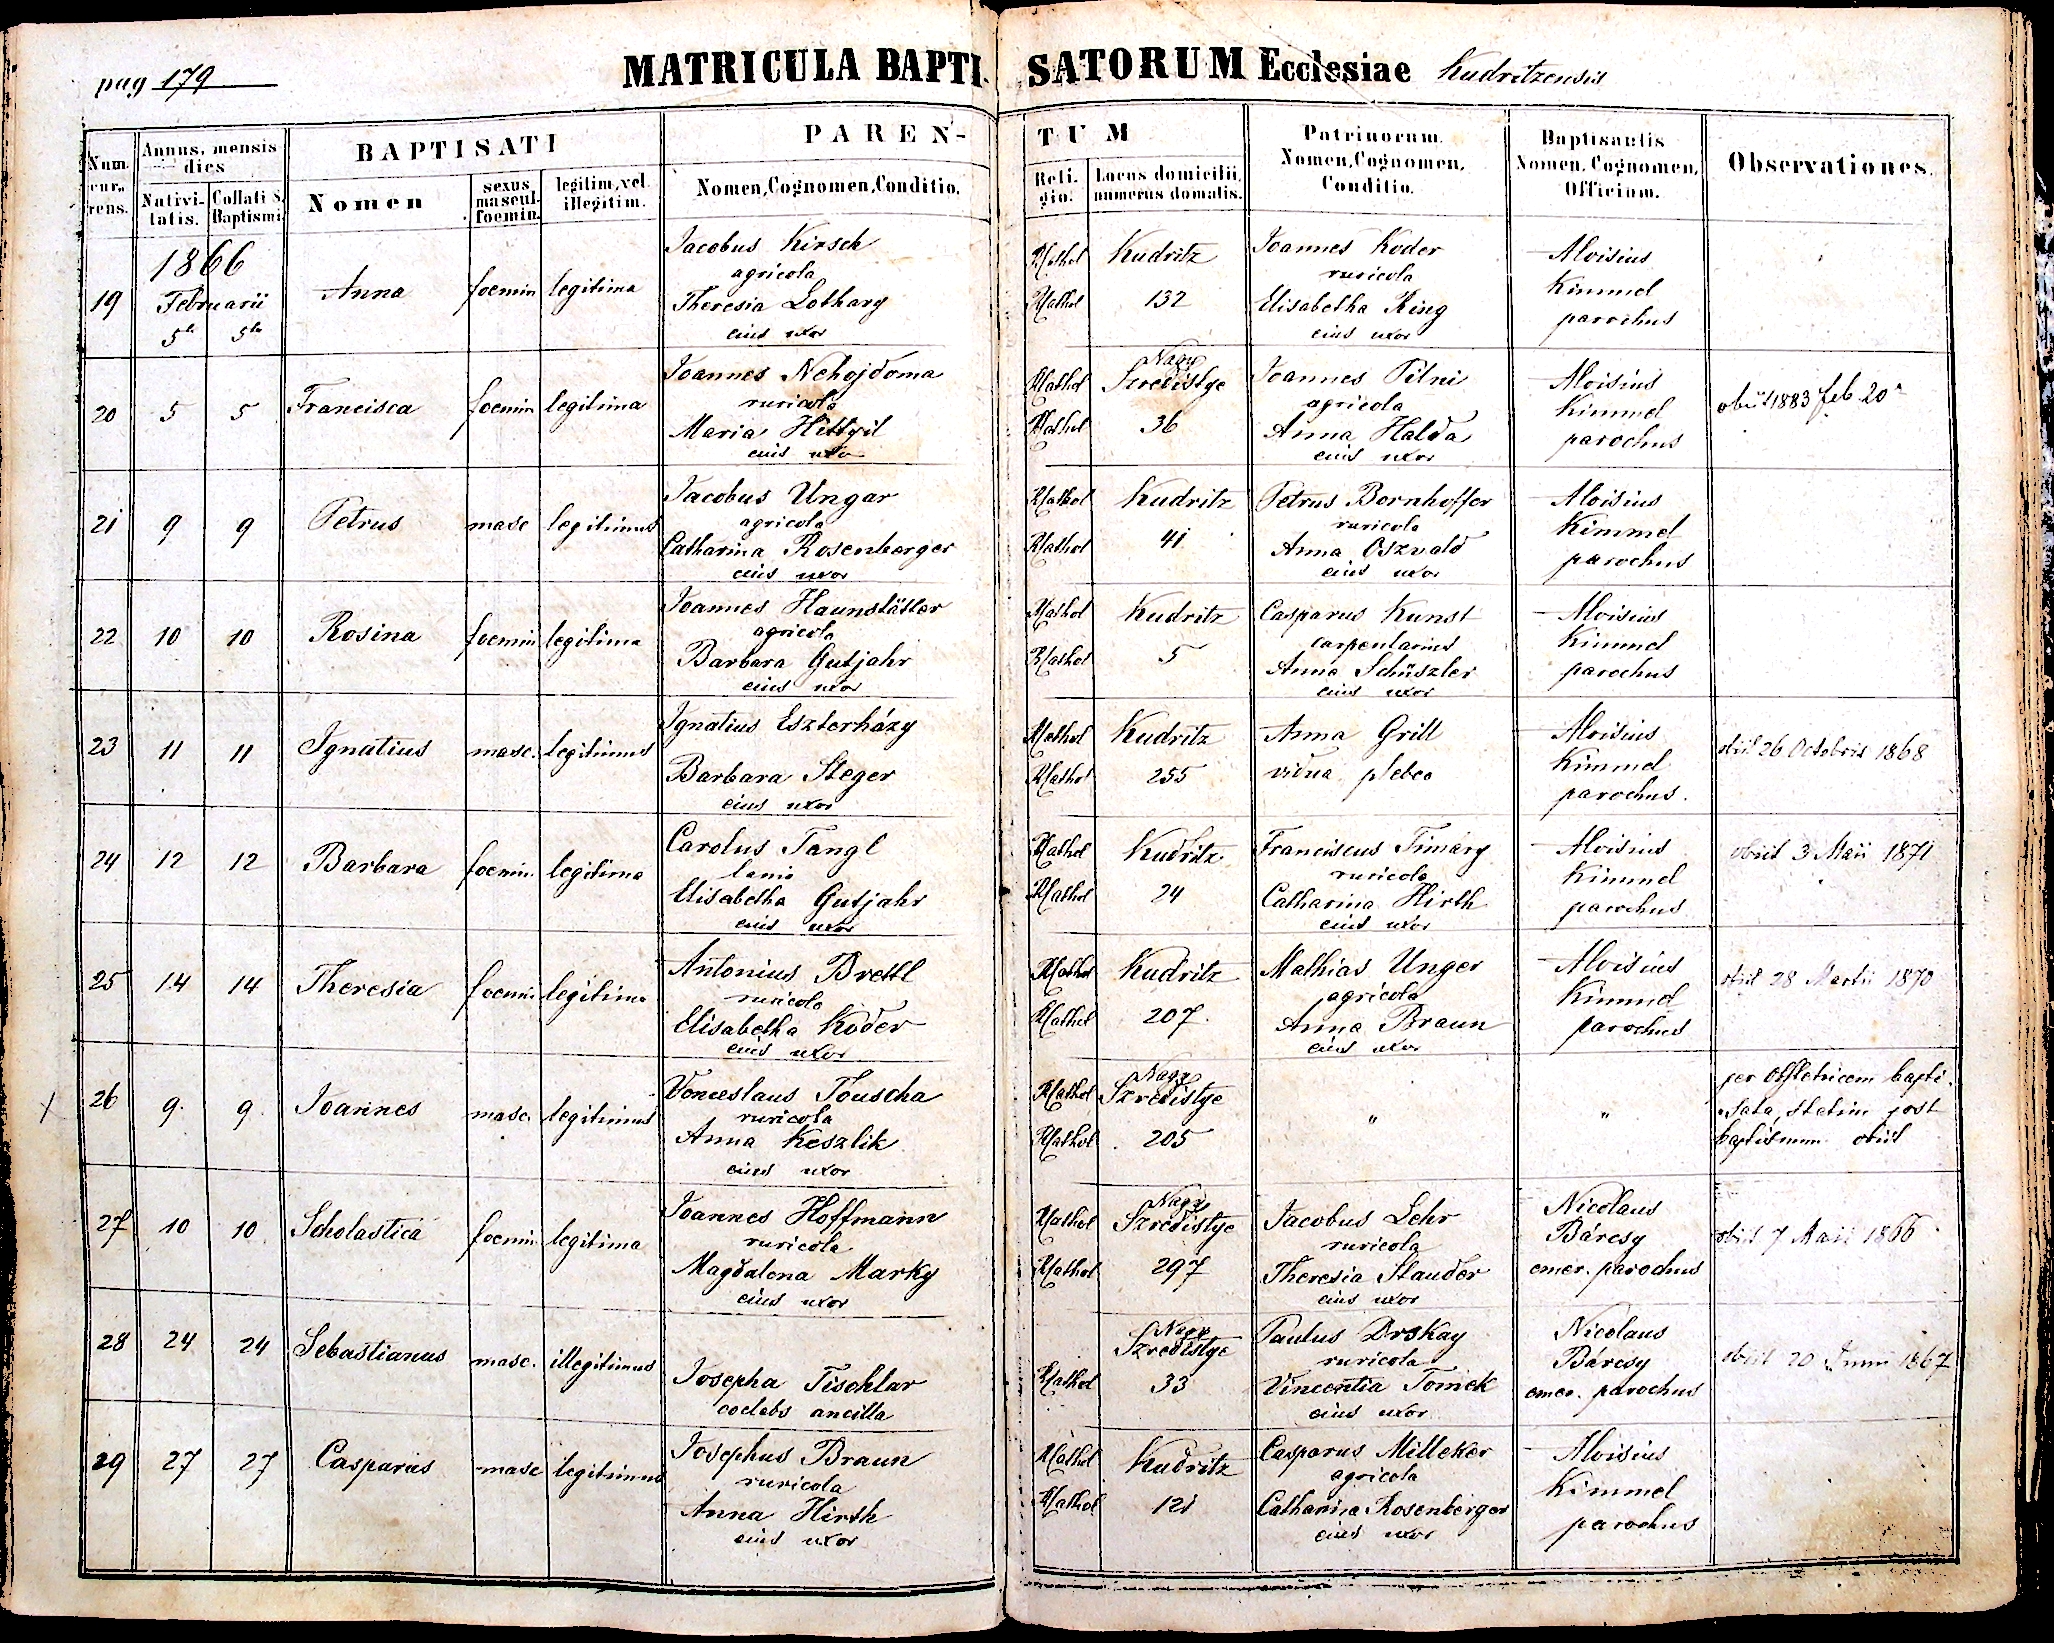 images/church_records/BIRTHS/1852-1870B/179